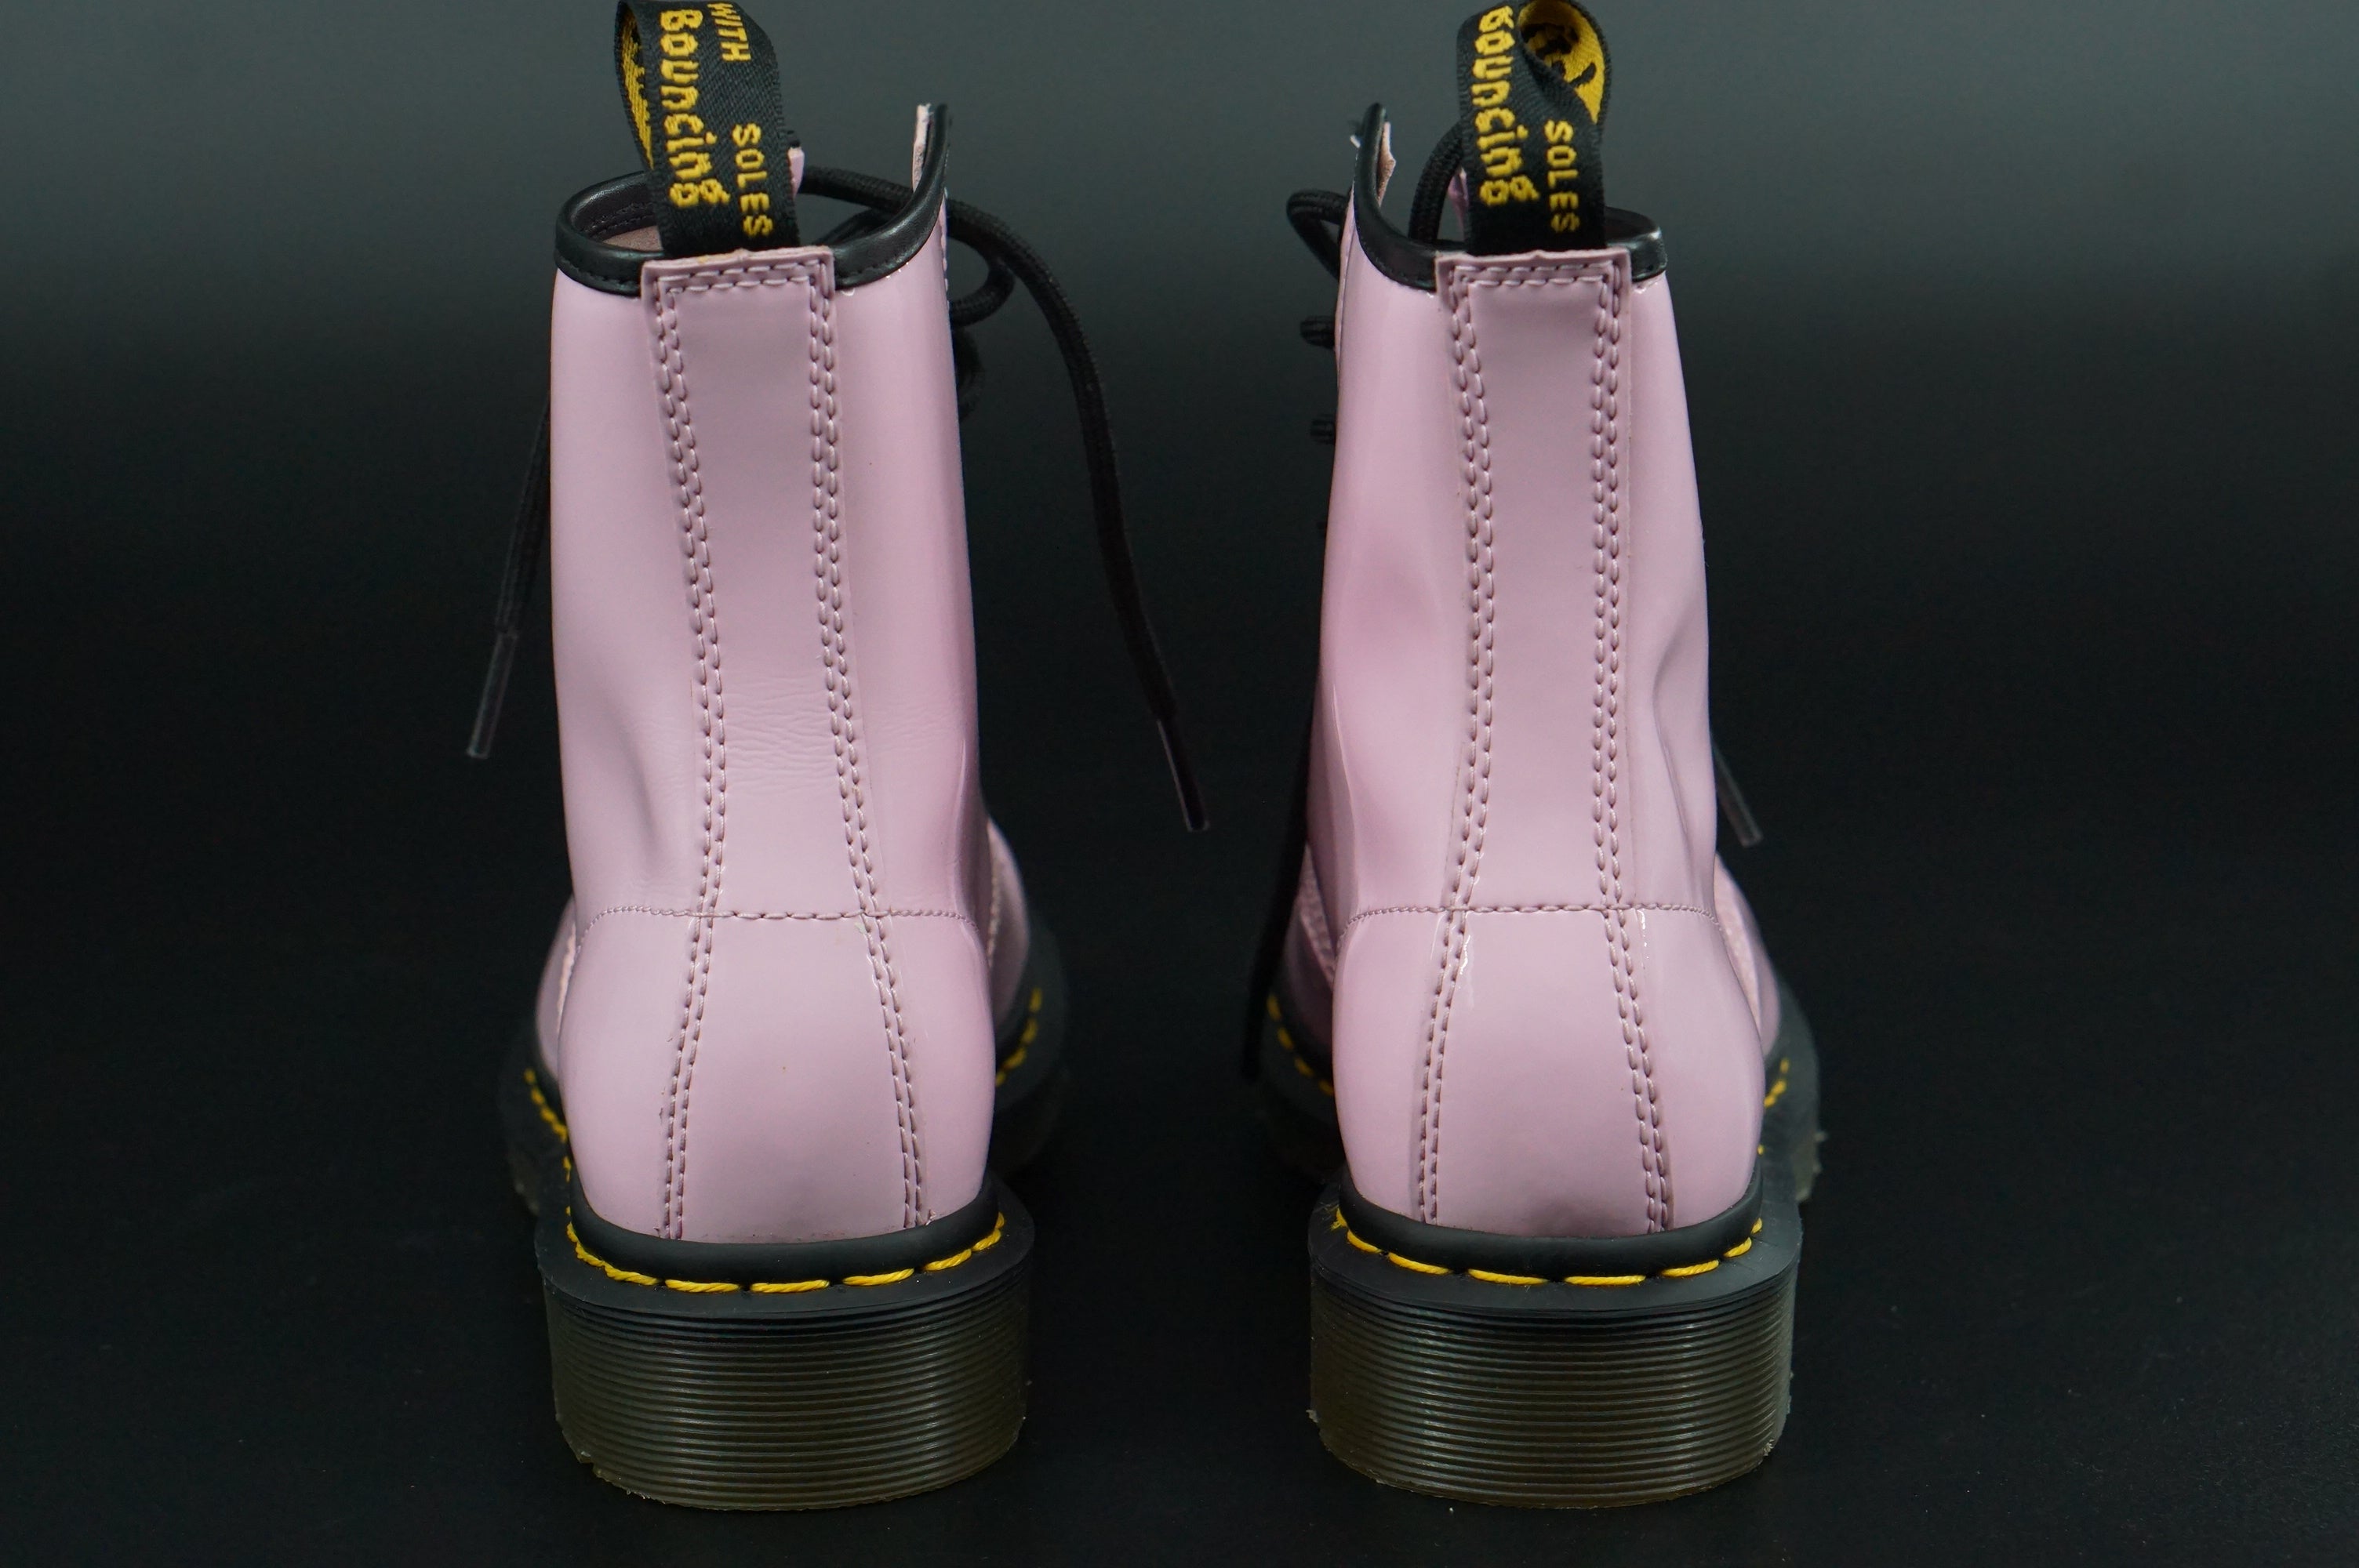 Doc Martens 1460 W combat ankle boots size 5 US laces Pink patent biker military